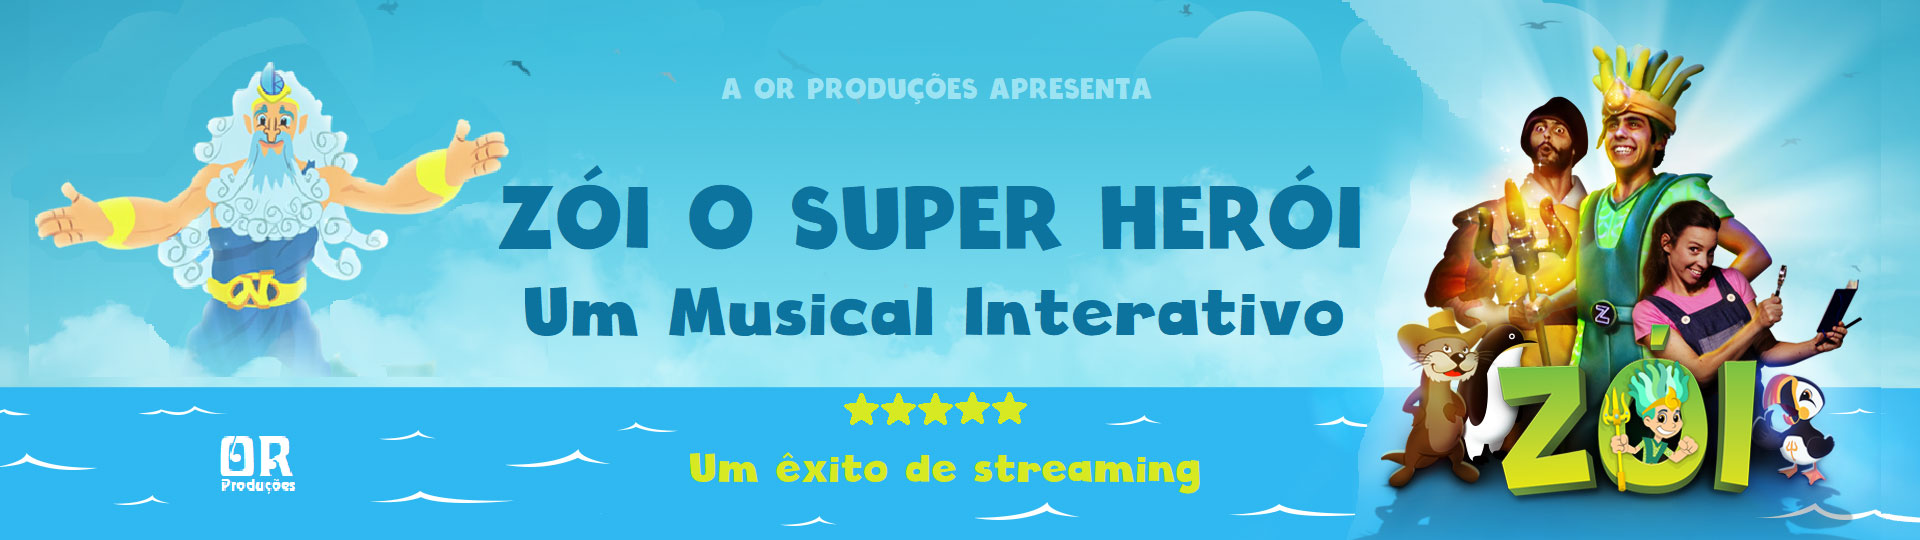 ZÓI, O SUPER HERÓI MUSICAL